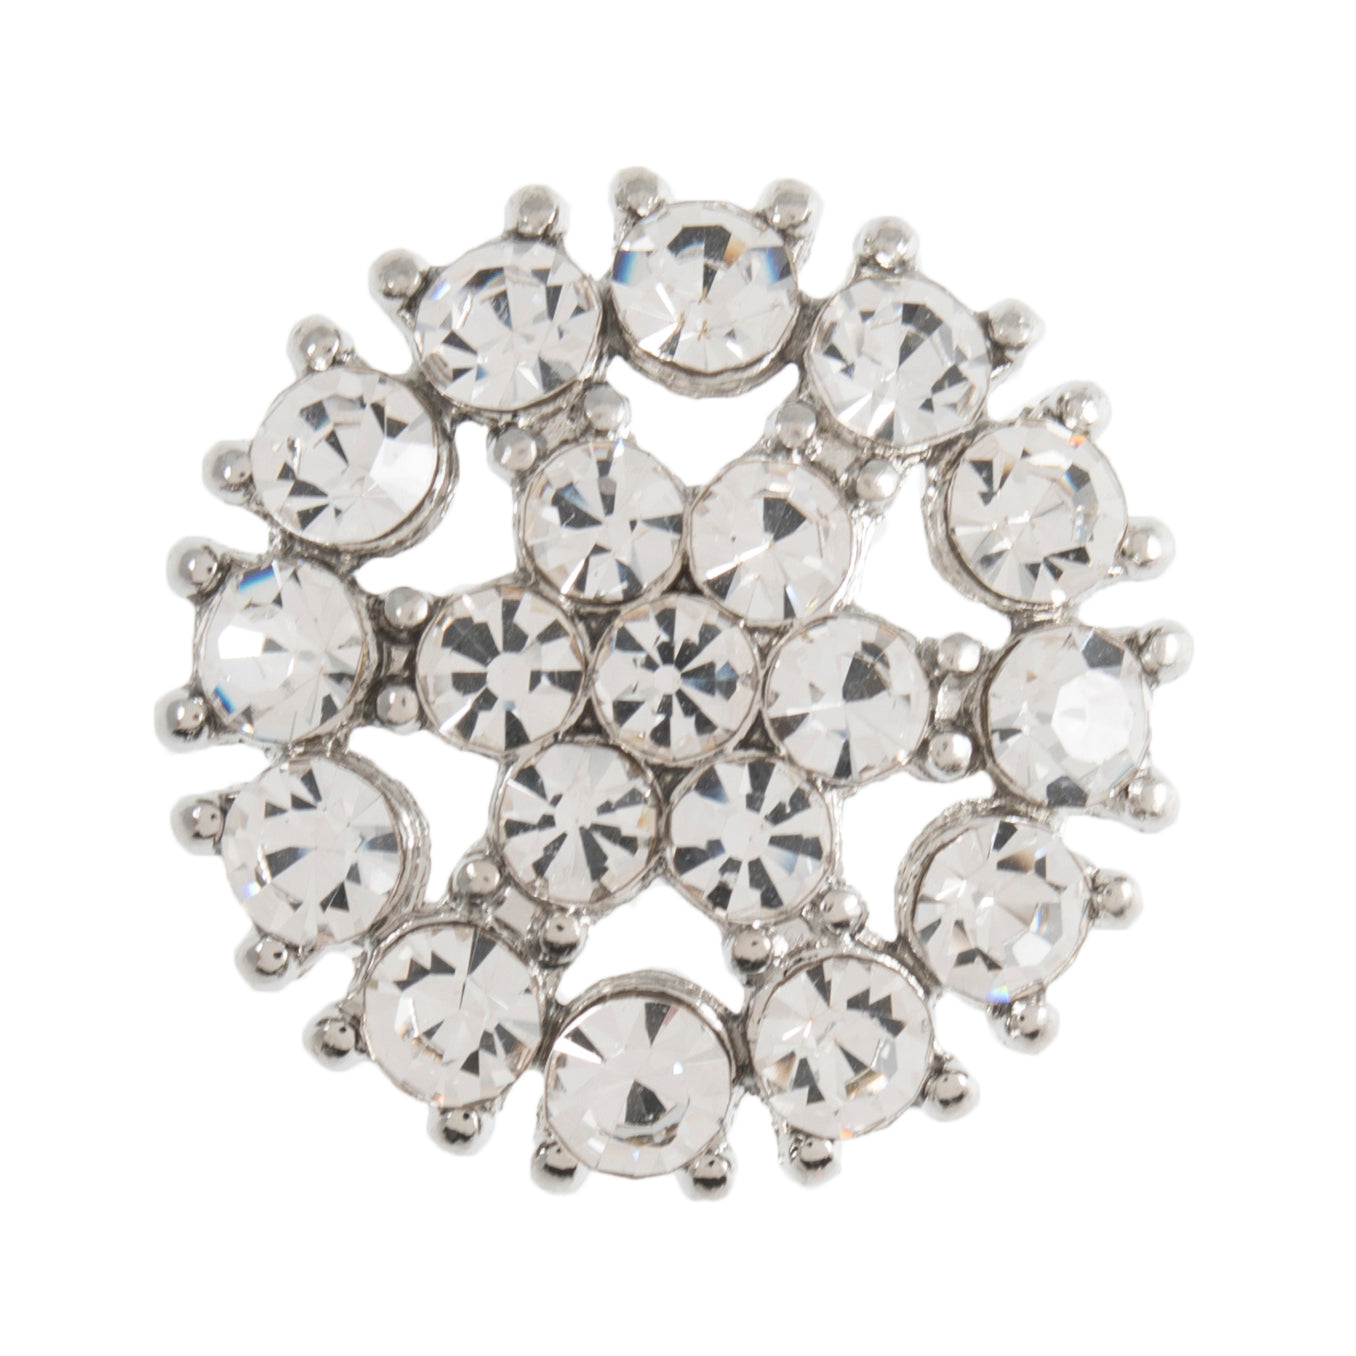 Diamante Flower in Circle Shank Button - 21mm -Silver